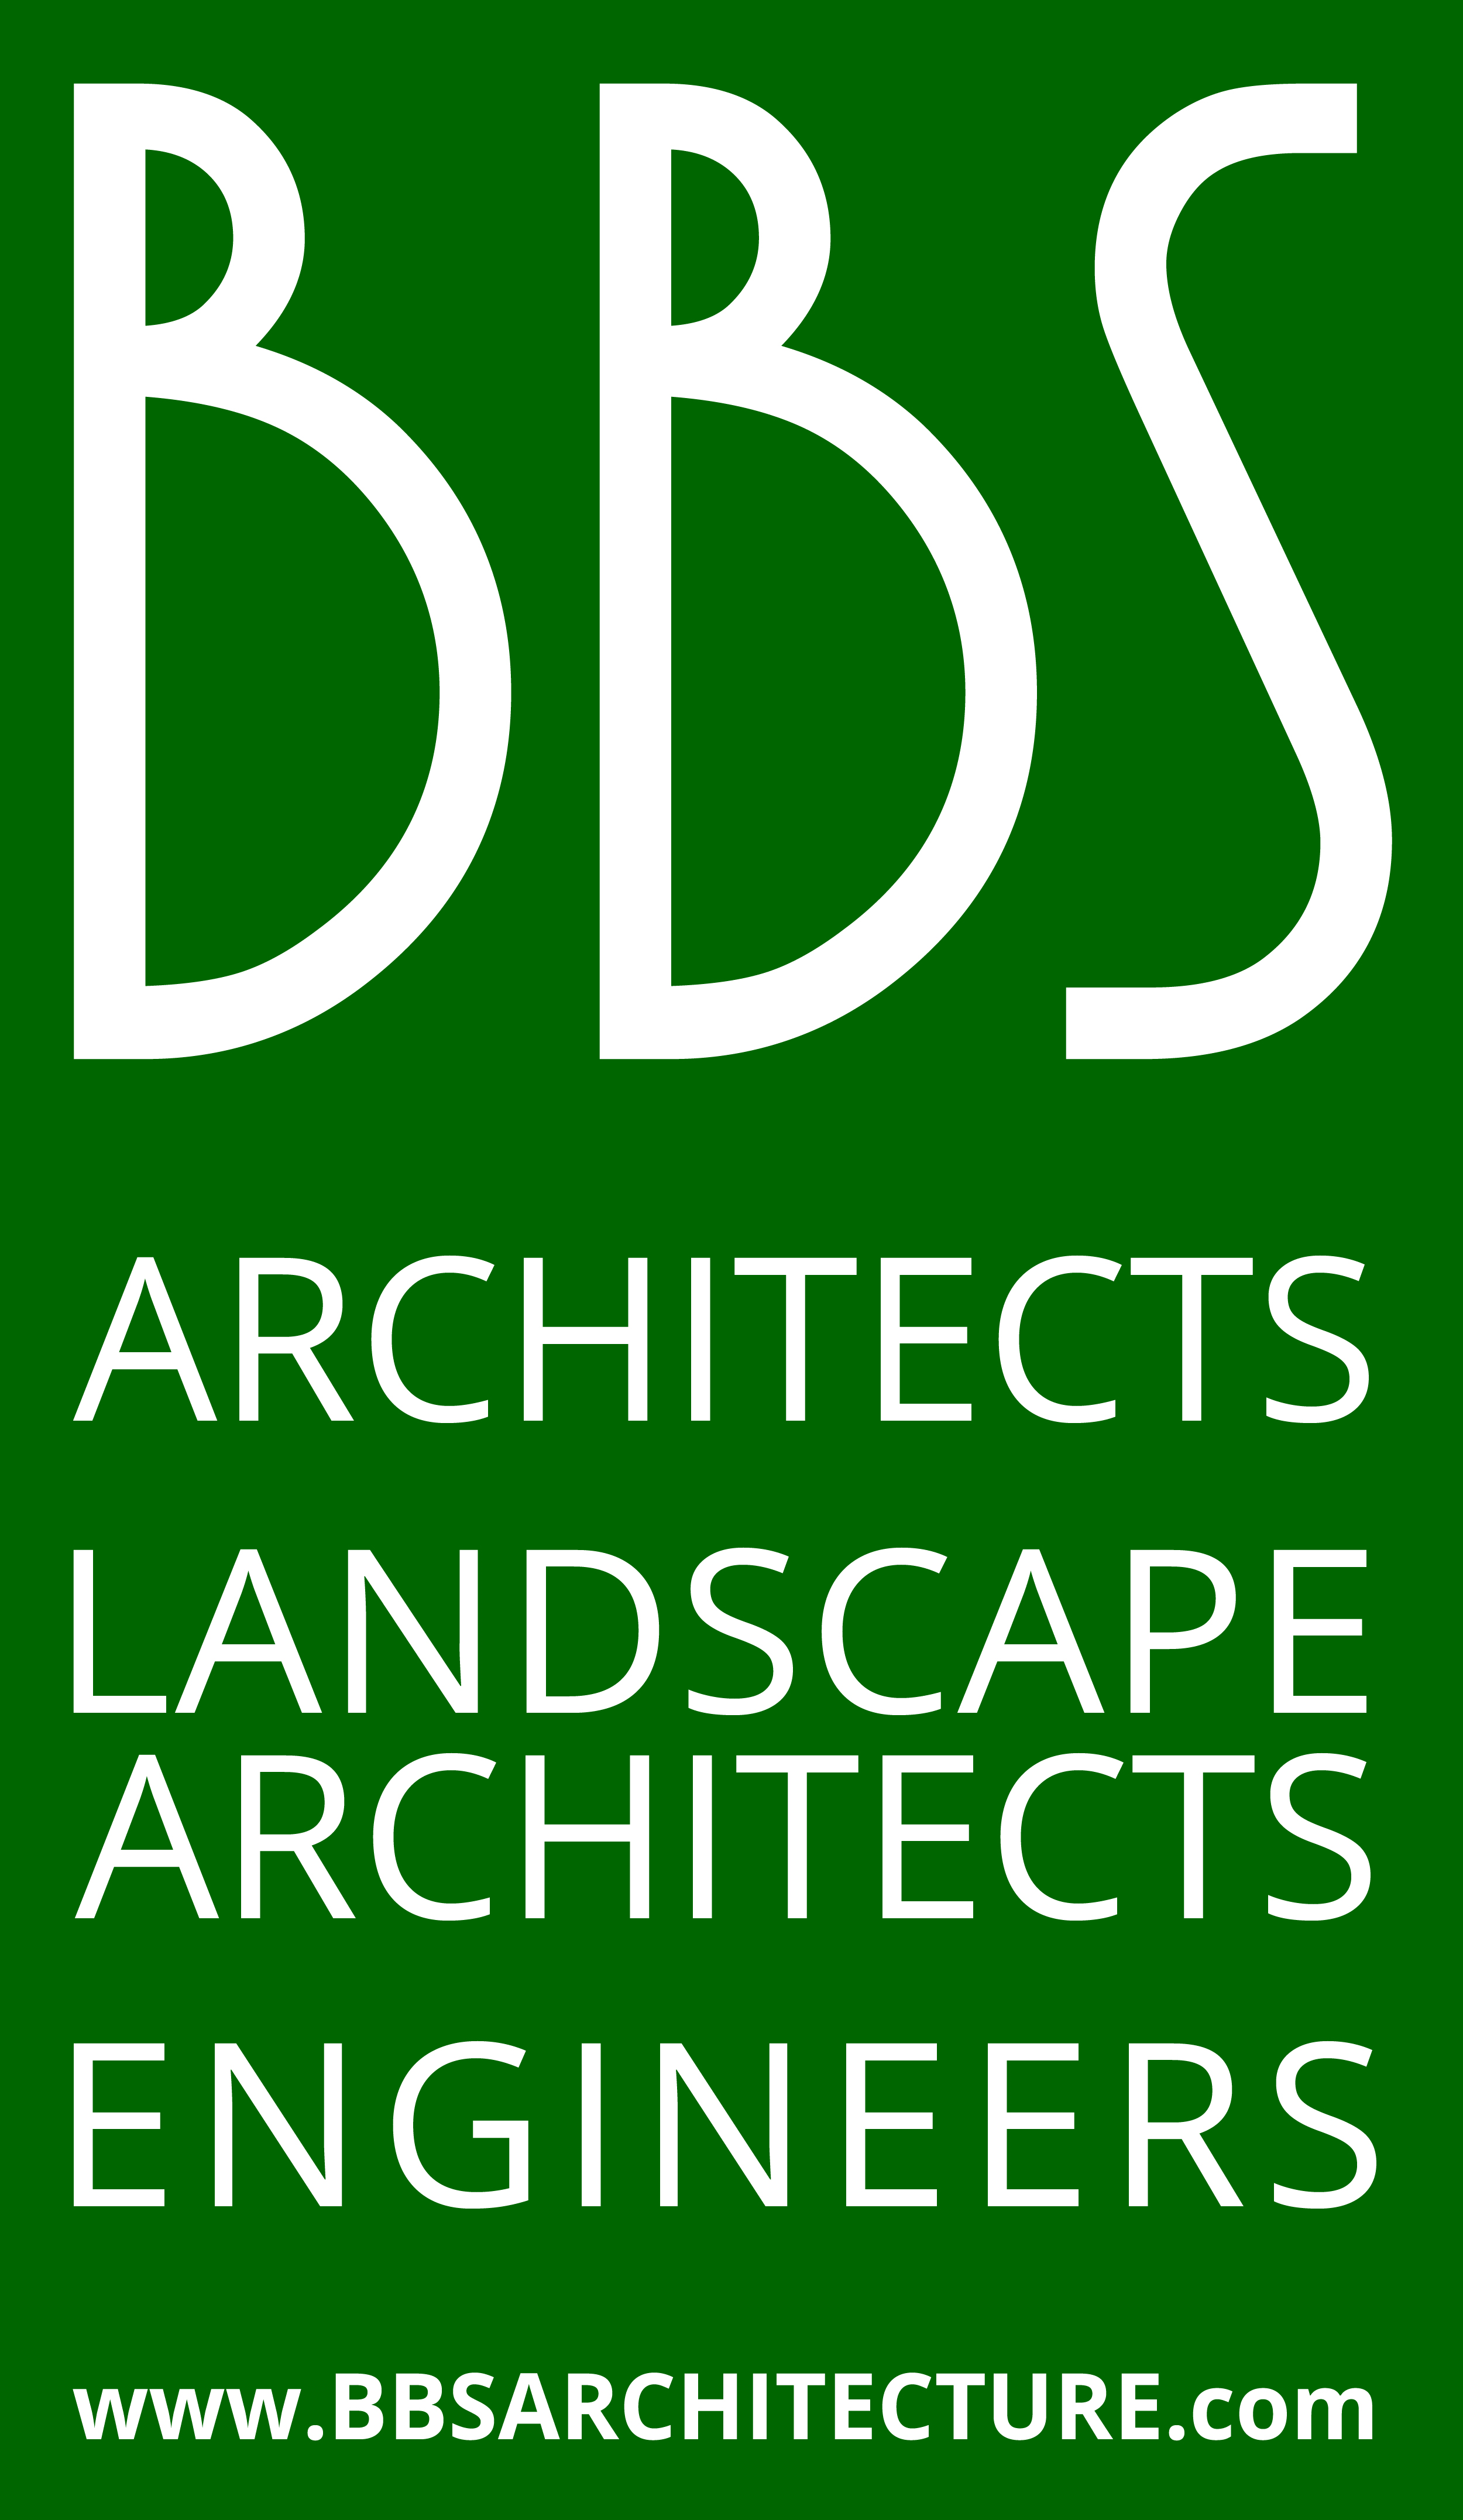 BBS Architects, Landscape Architects, & Engineers, P.C. Company Logo